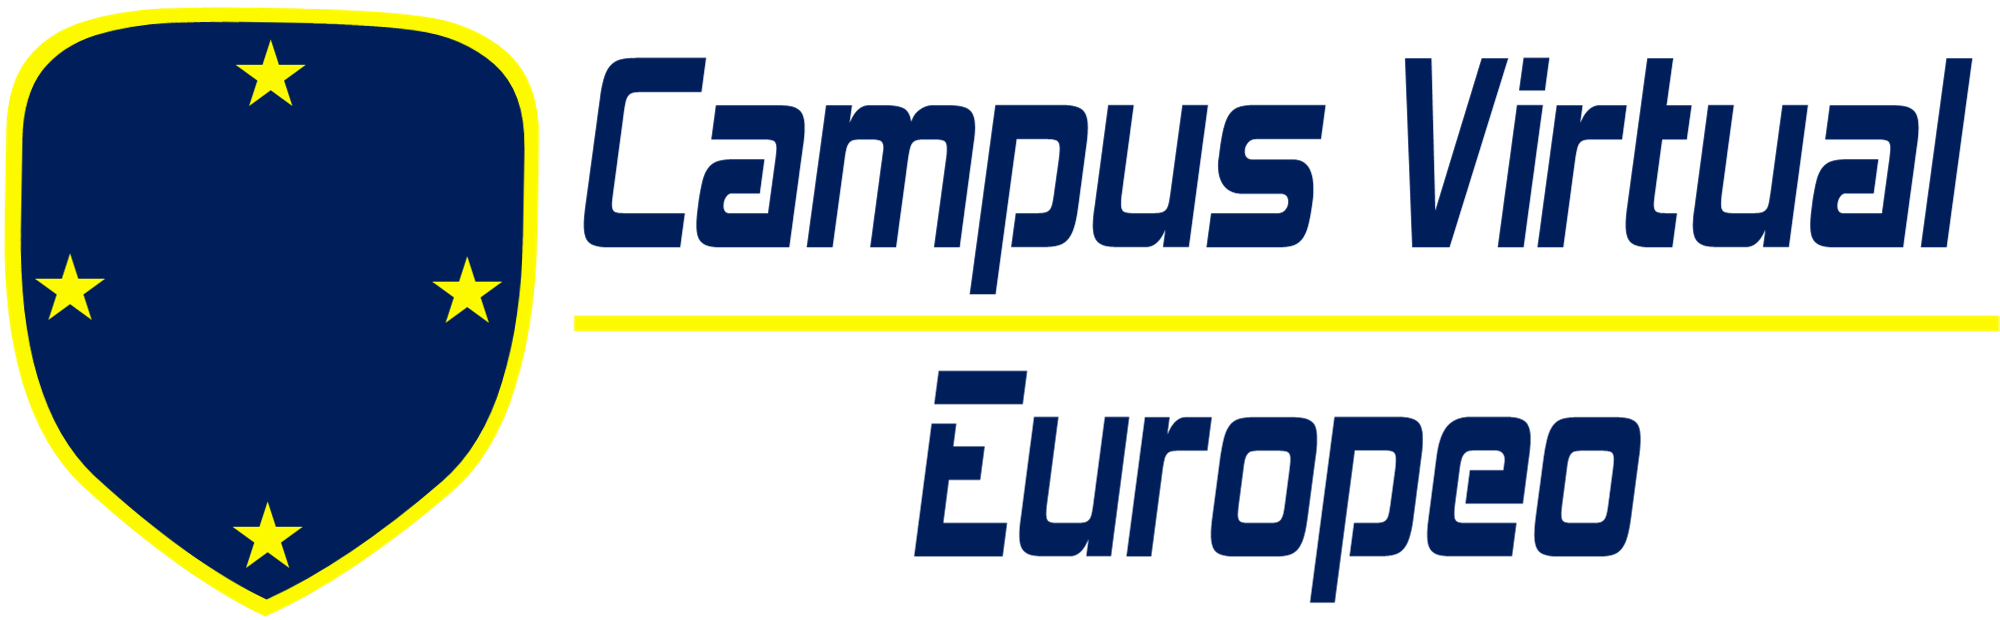 Campus Virtual Europeo